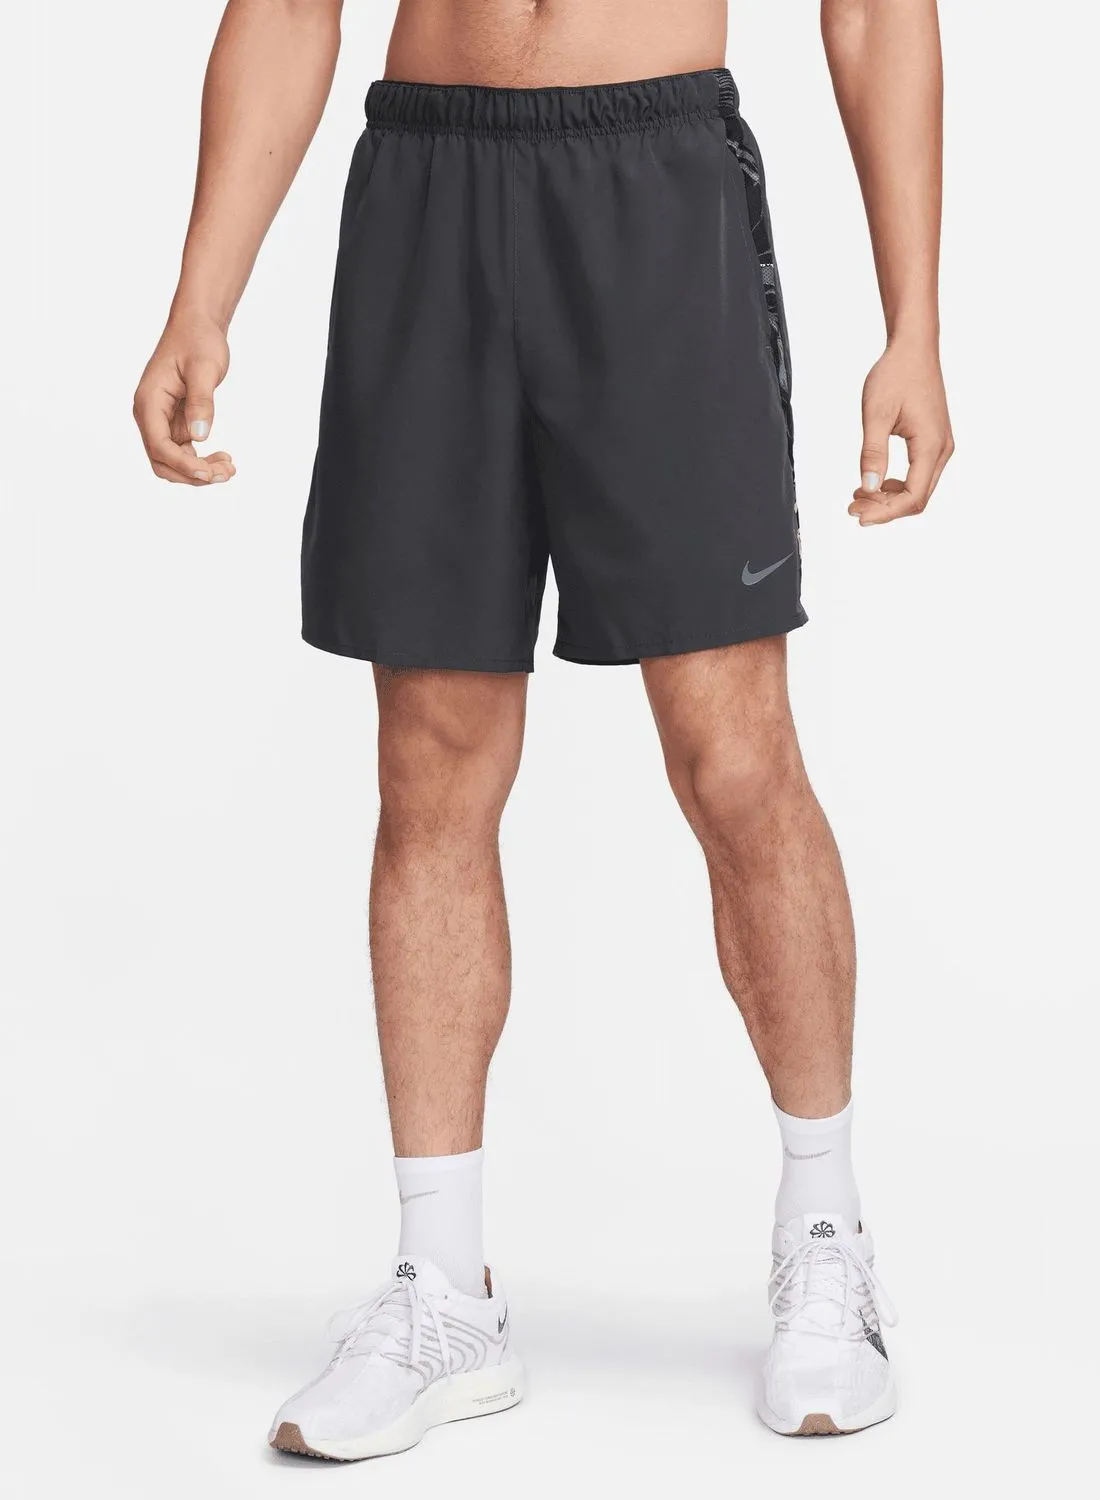 Nike Dri-Fit S72 Challenger Shorts